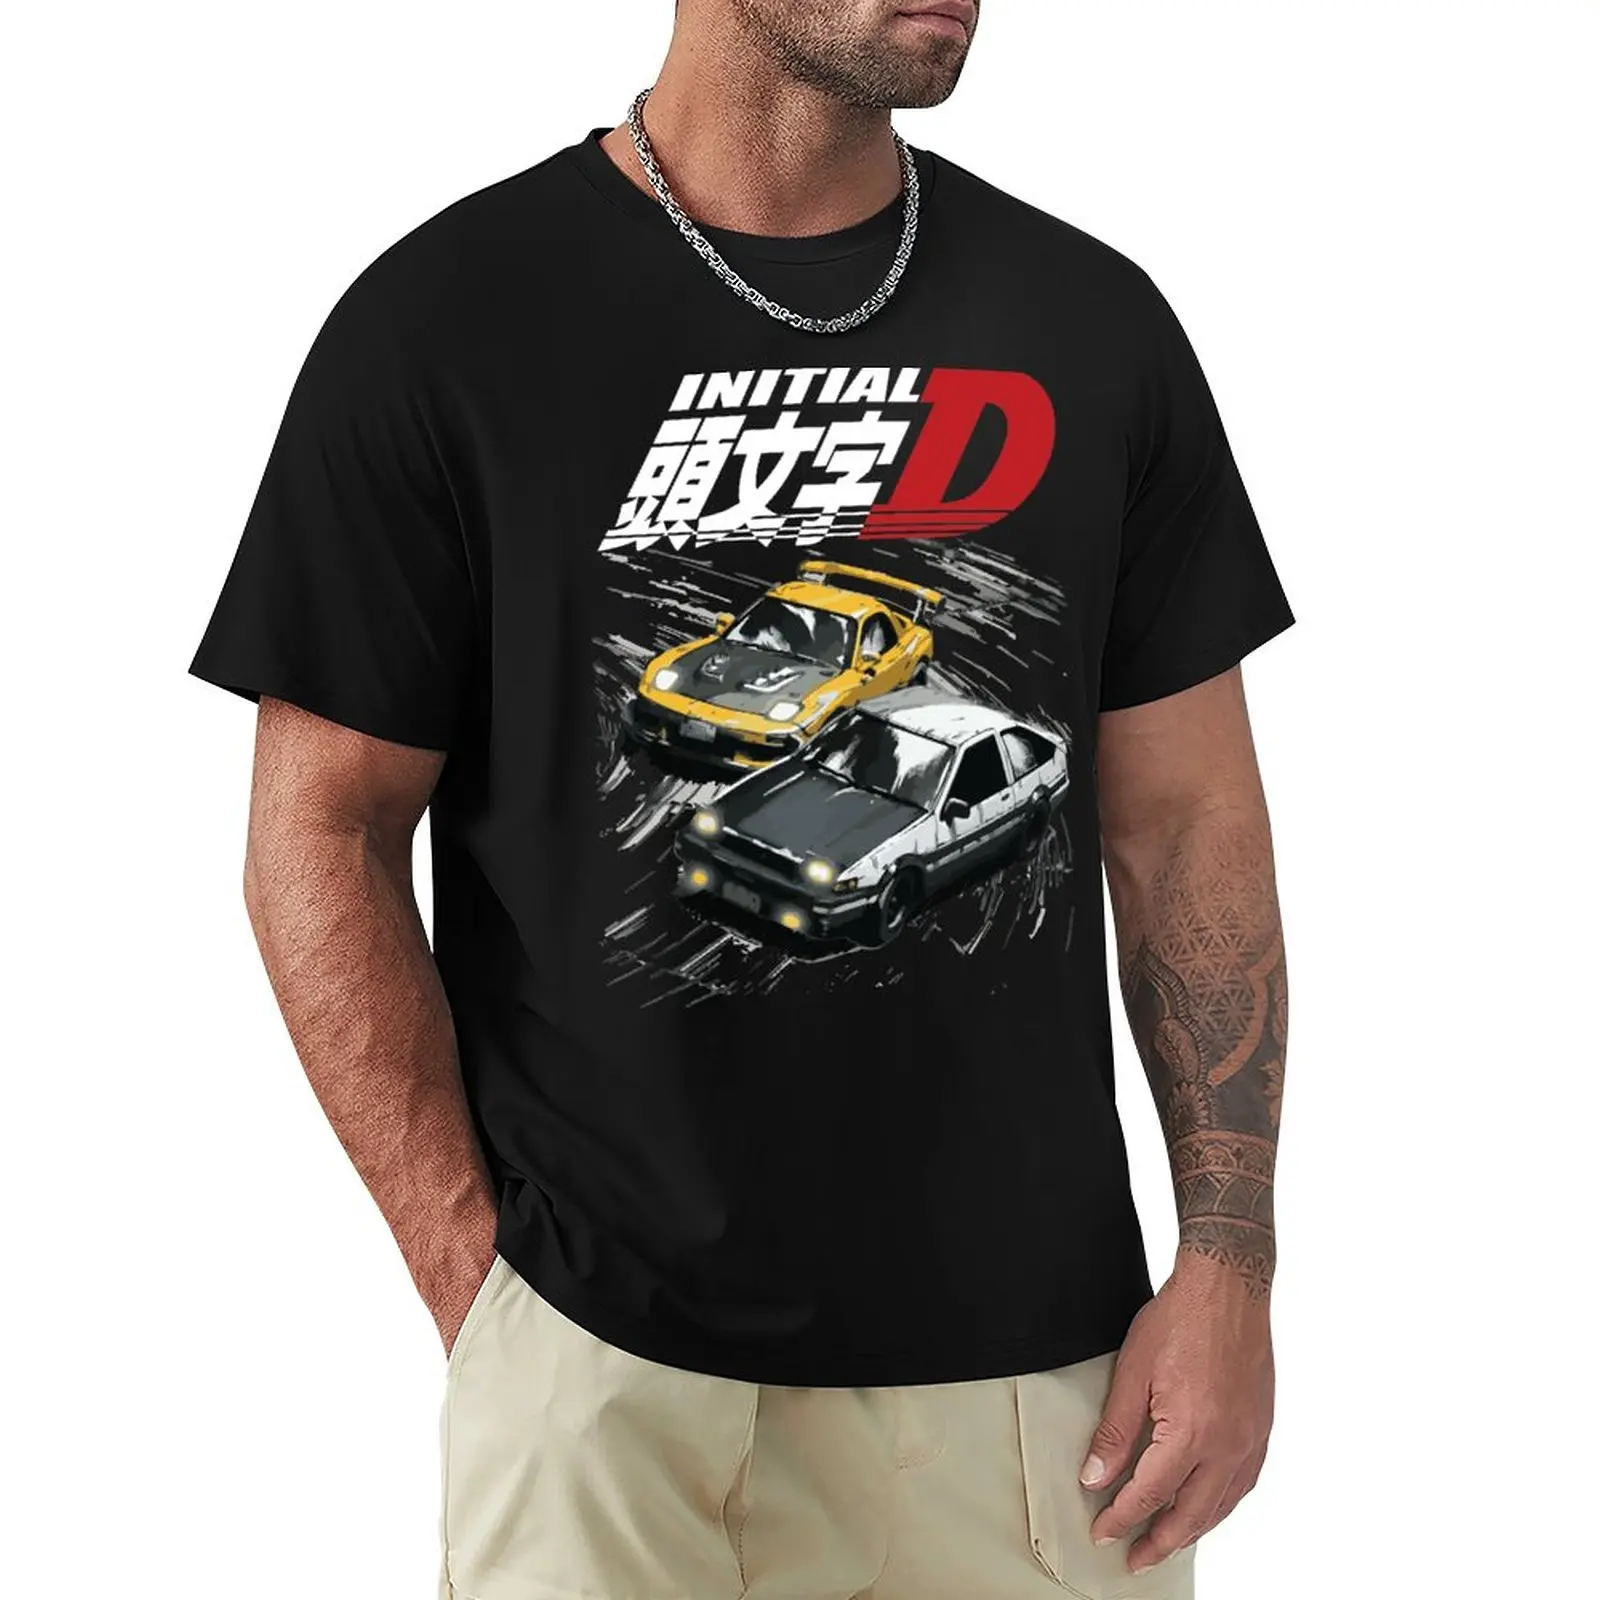 Начальная футболка D - Mountain Drift Racing Tandems AE86 takumi vs FD rx-7 keisuke, черная одежда в стиле хиппи, мужские графические футболки